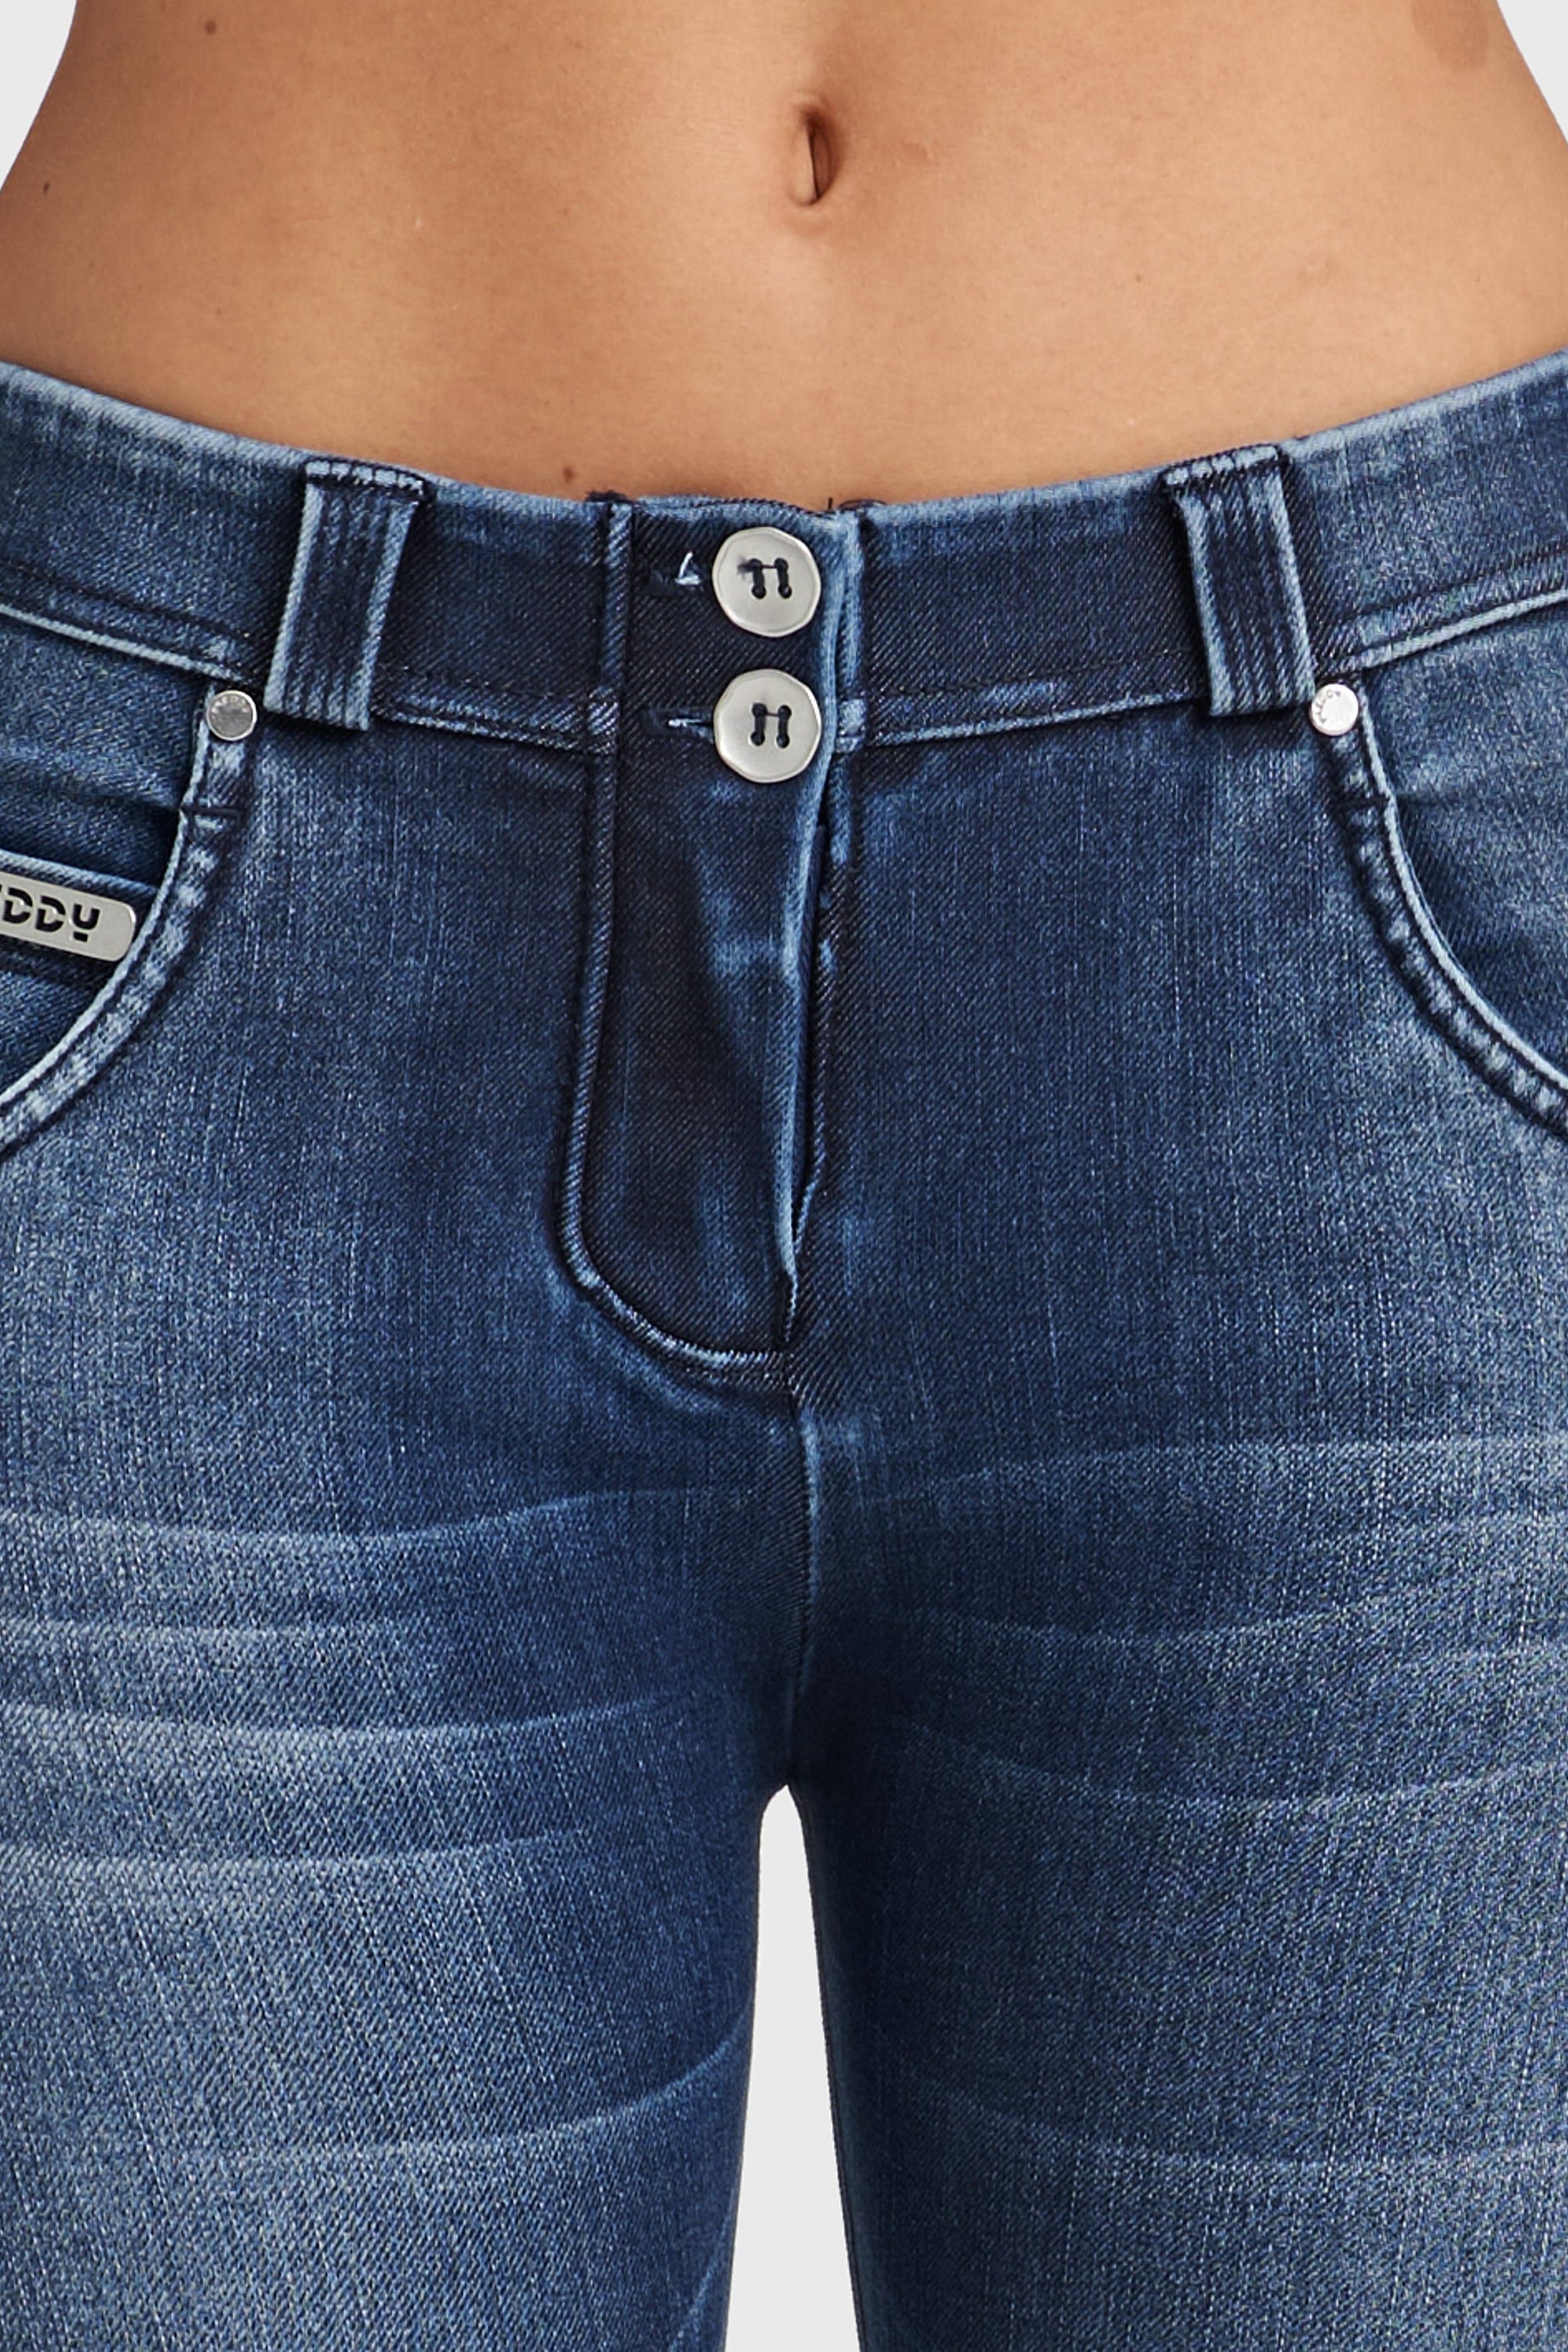 WR.UP® Snug Jeans - Mid Rise - Full Length - Dark Blue + Blue Stitching 10